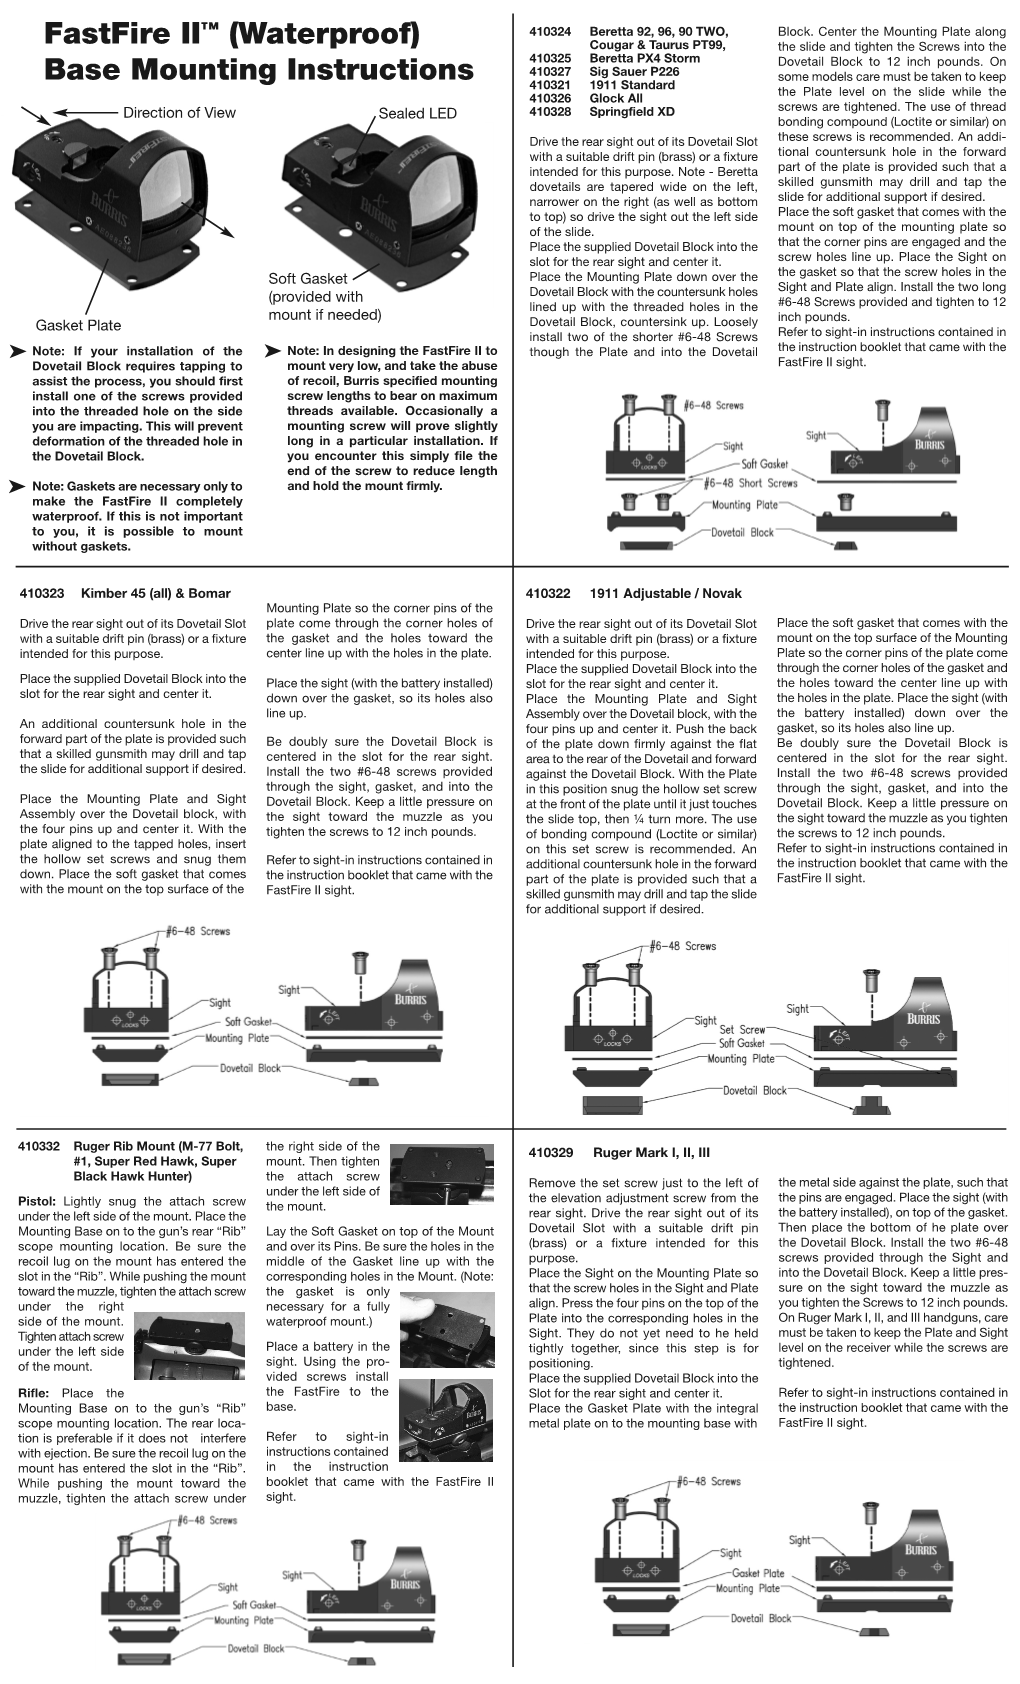 Fastfire II™ (Waterproof) Base Mounting Instructions